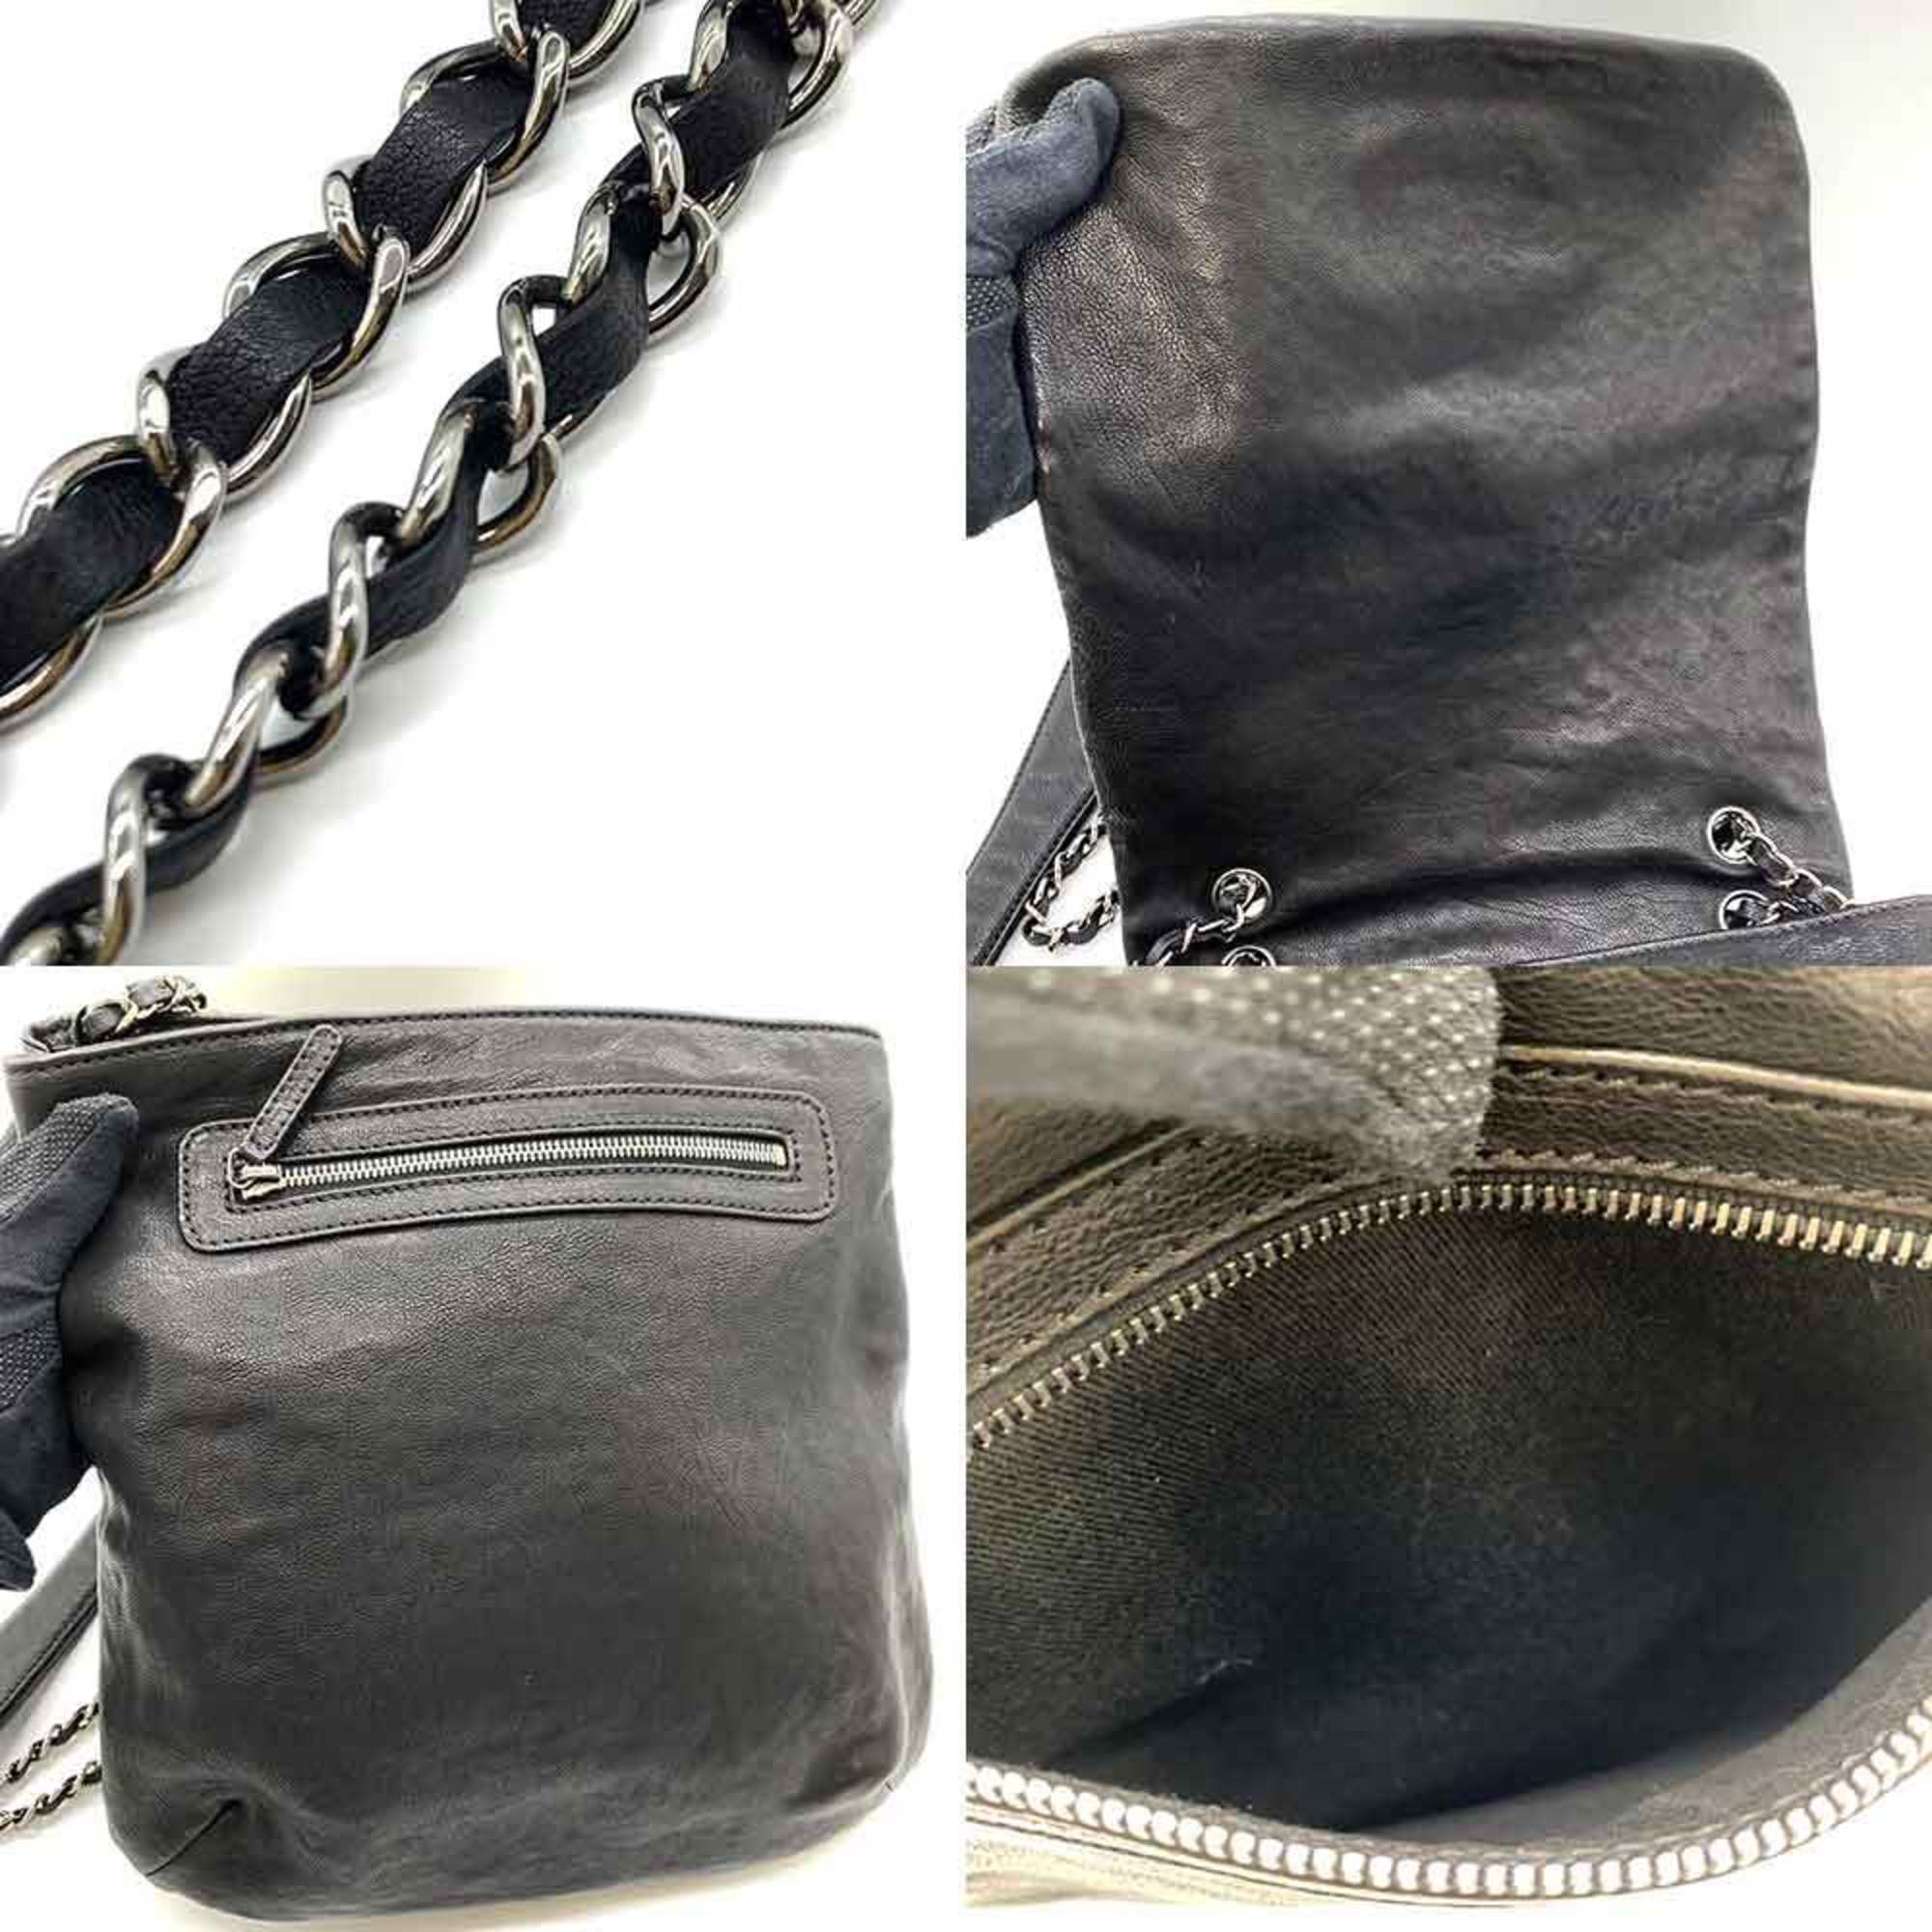 CHANEL Bag Wild Stitch Chain Shoulder Black Crossbody Women's Calf Leather A32453